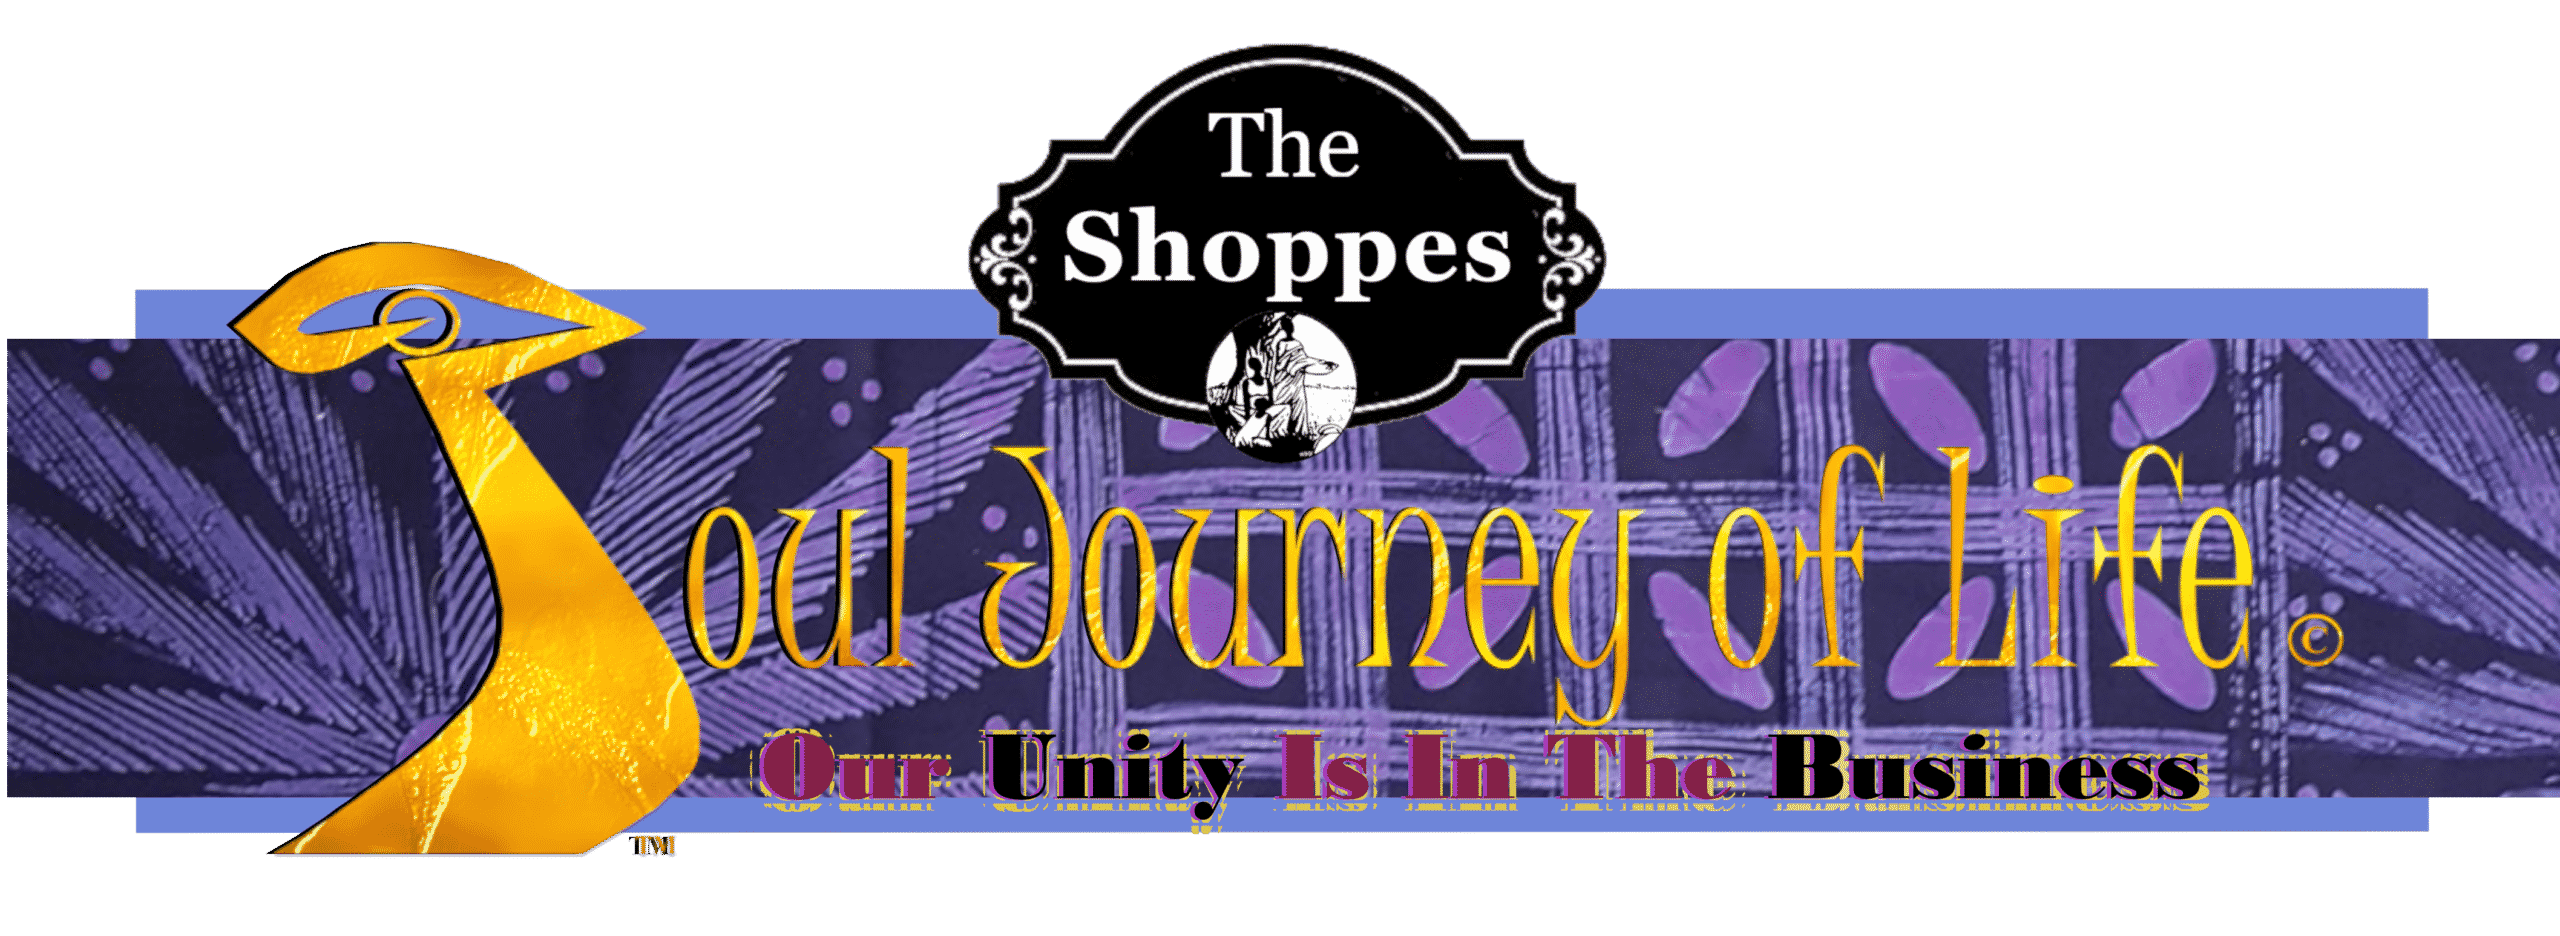 The Shoppes on Soul Journey of Life Logo